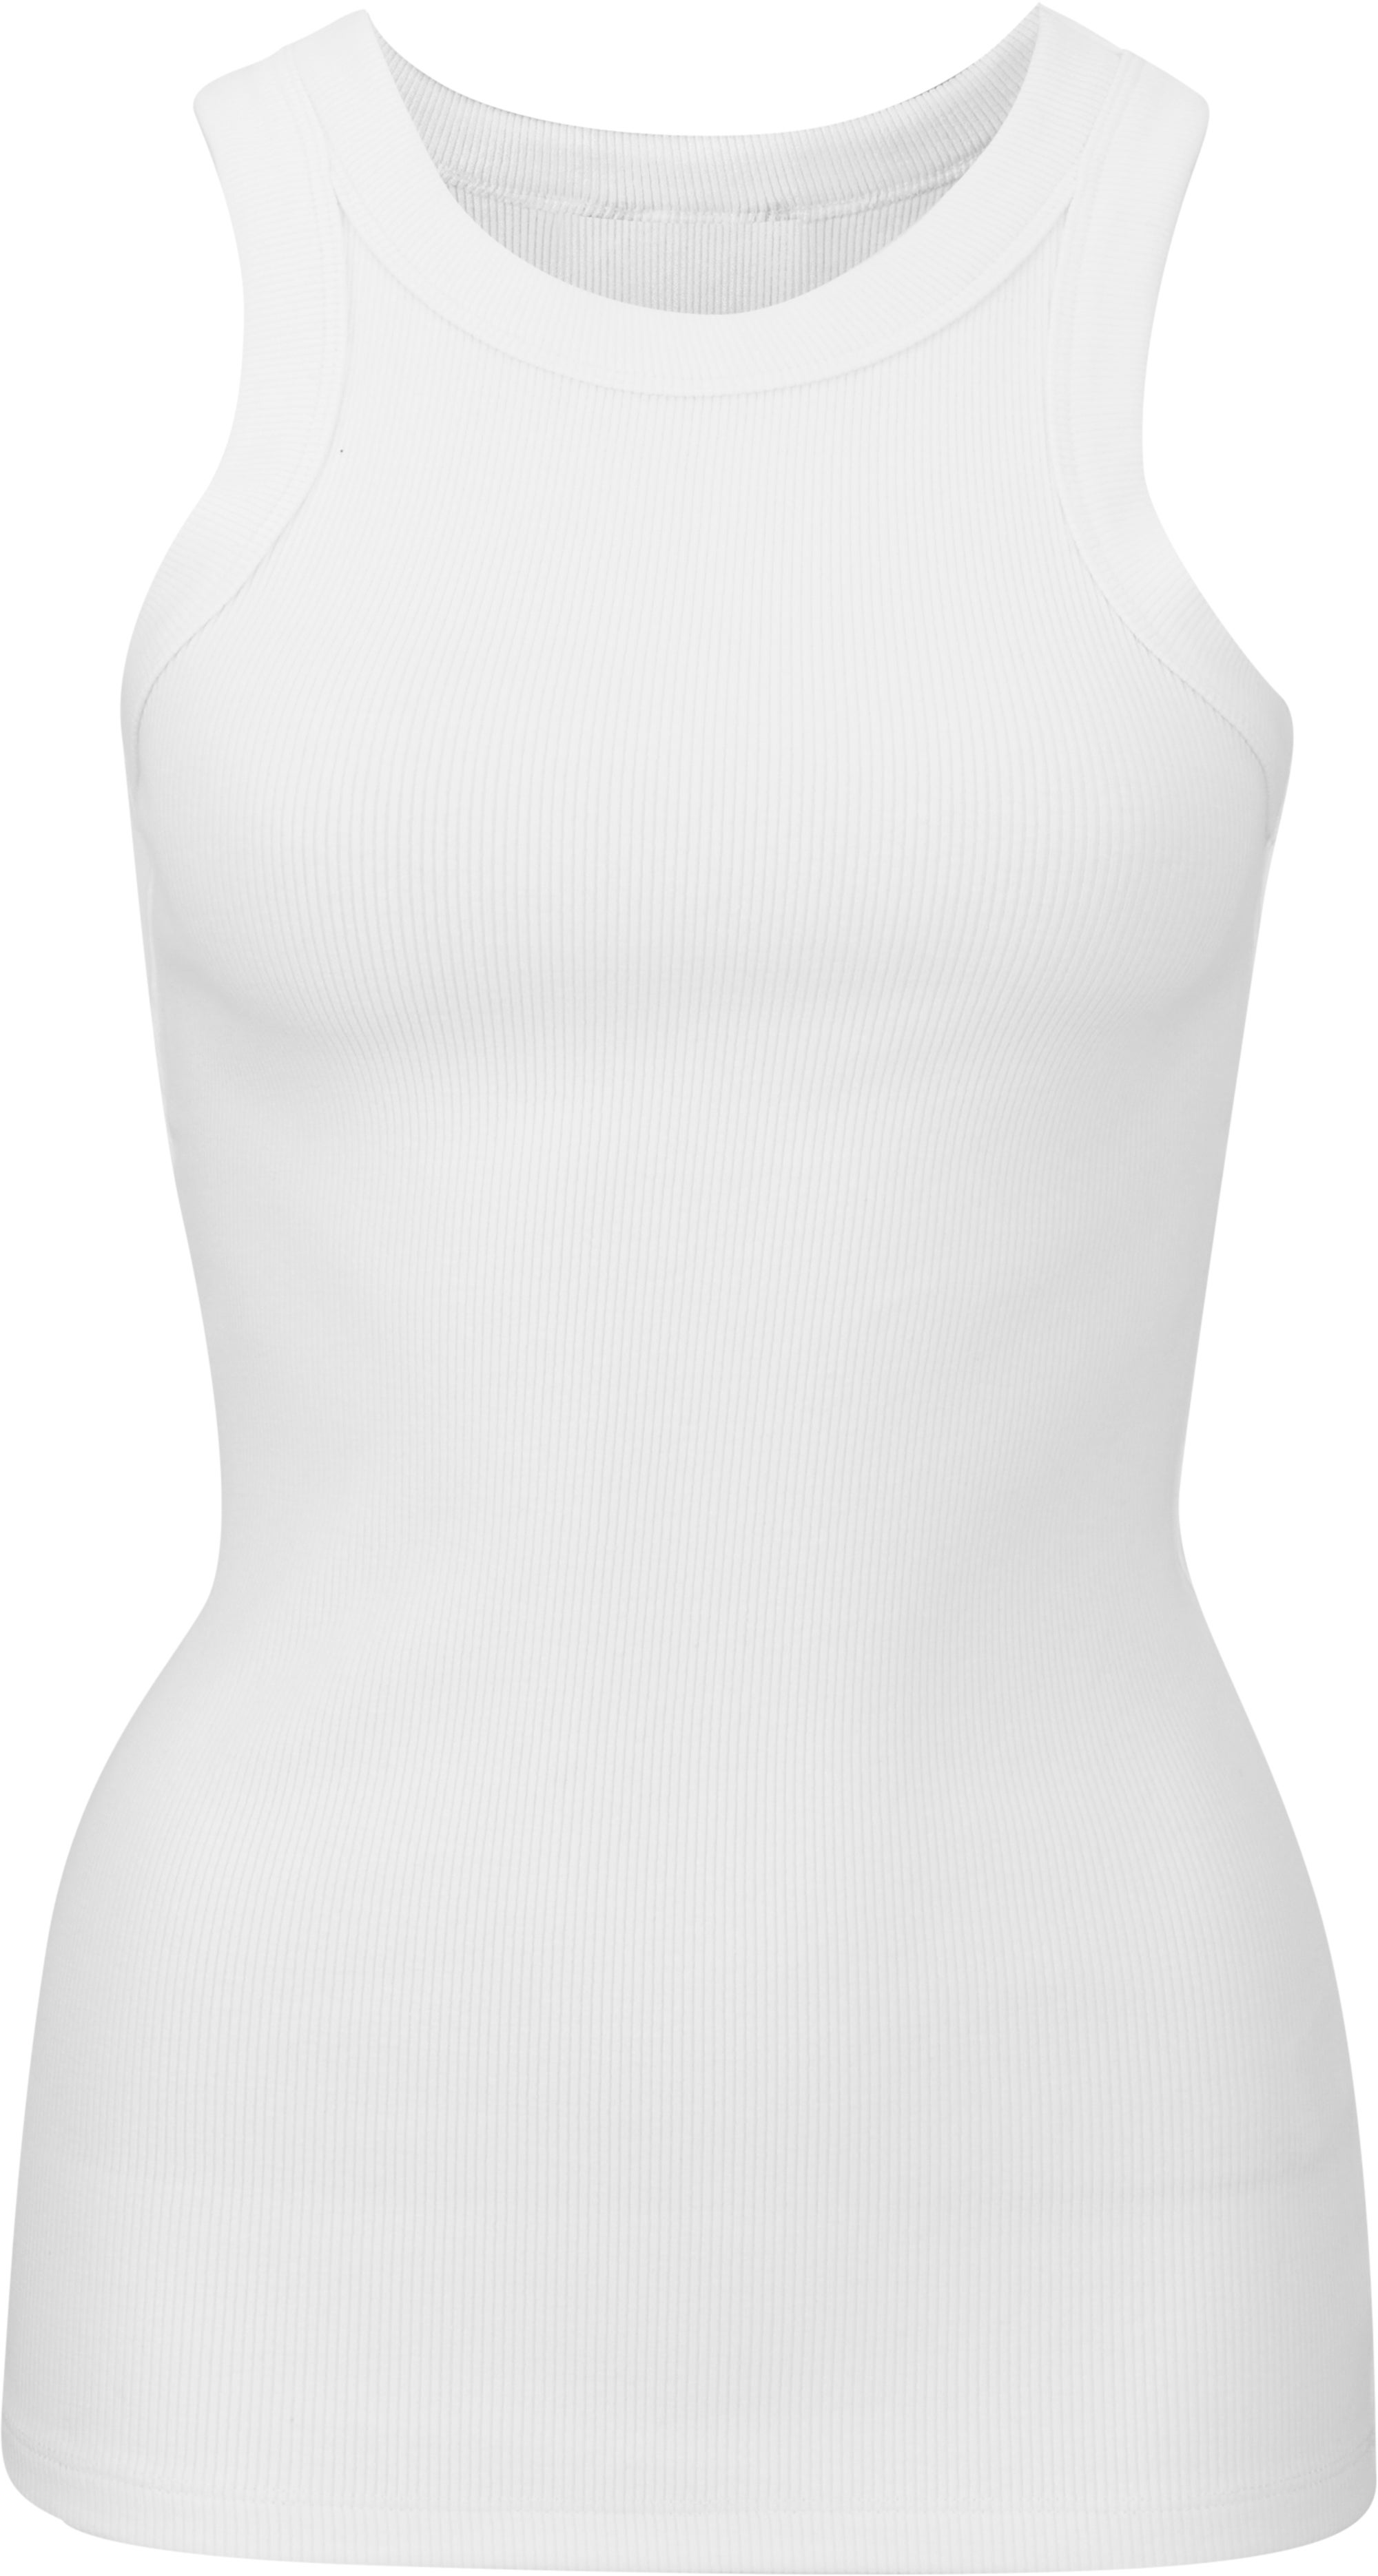 Women's Rib Knit Tank in White